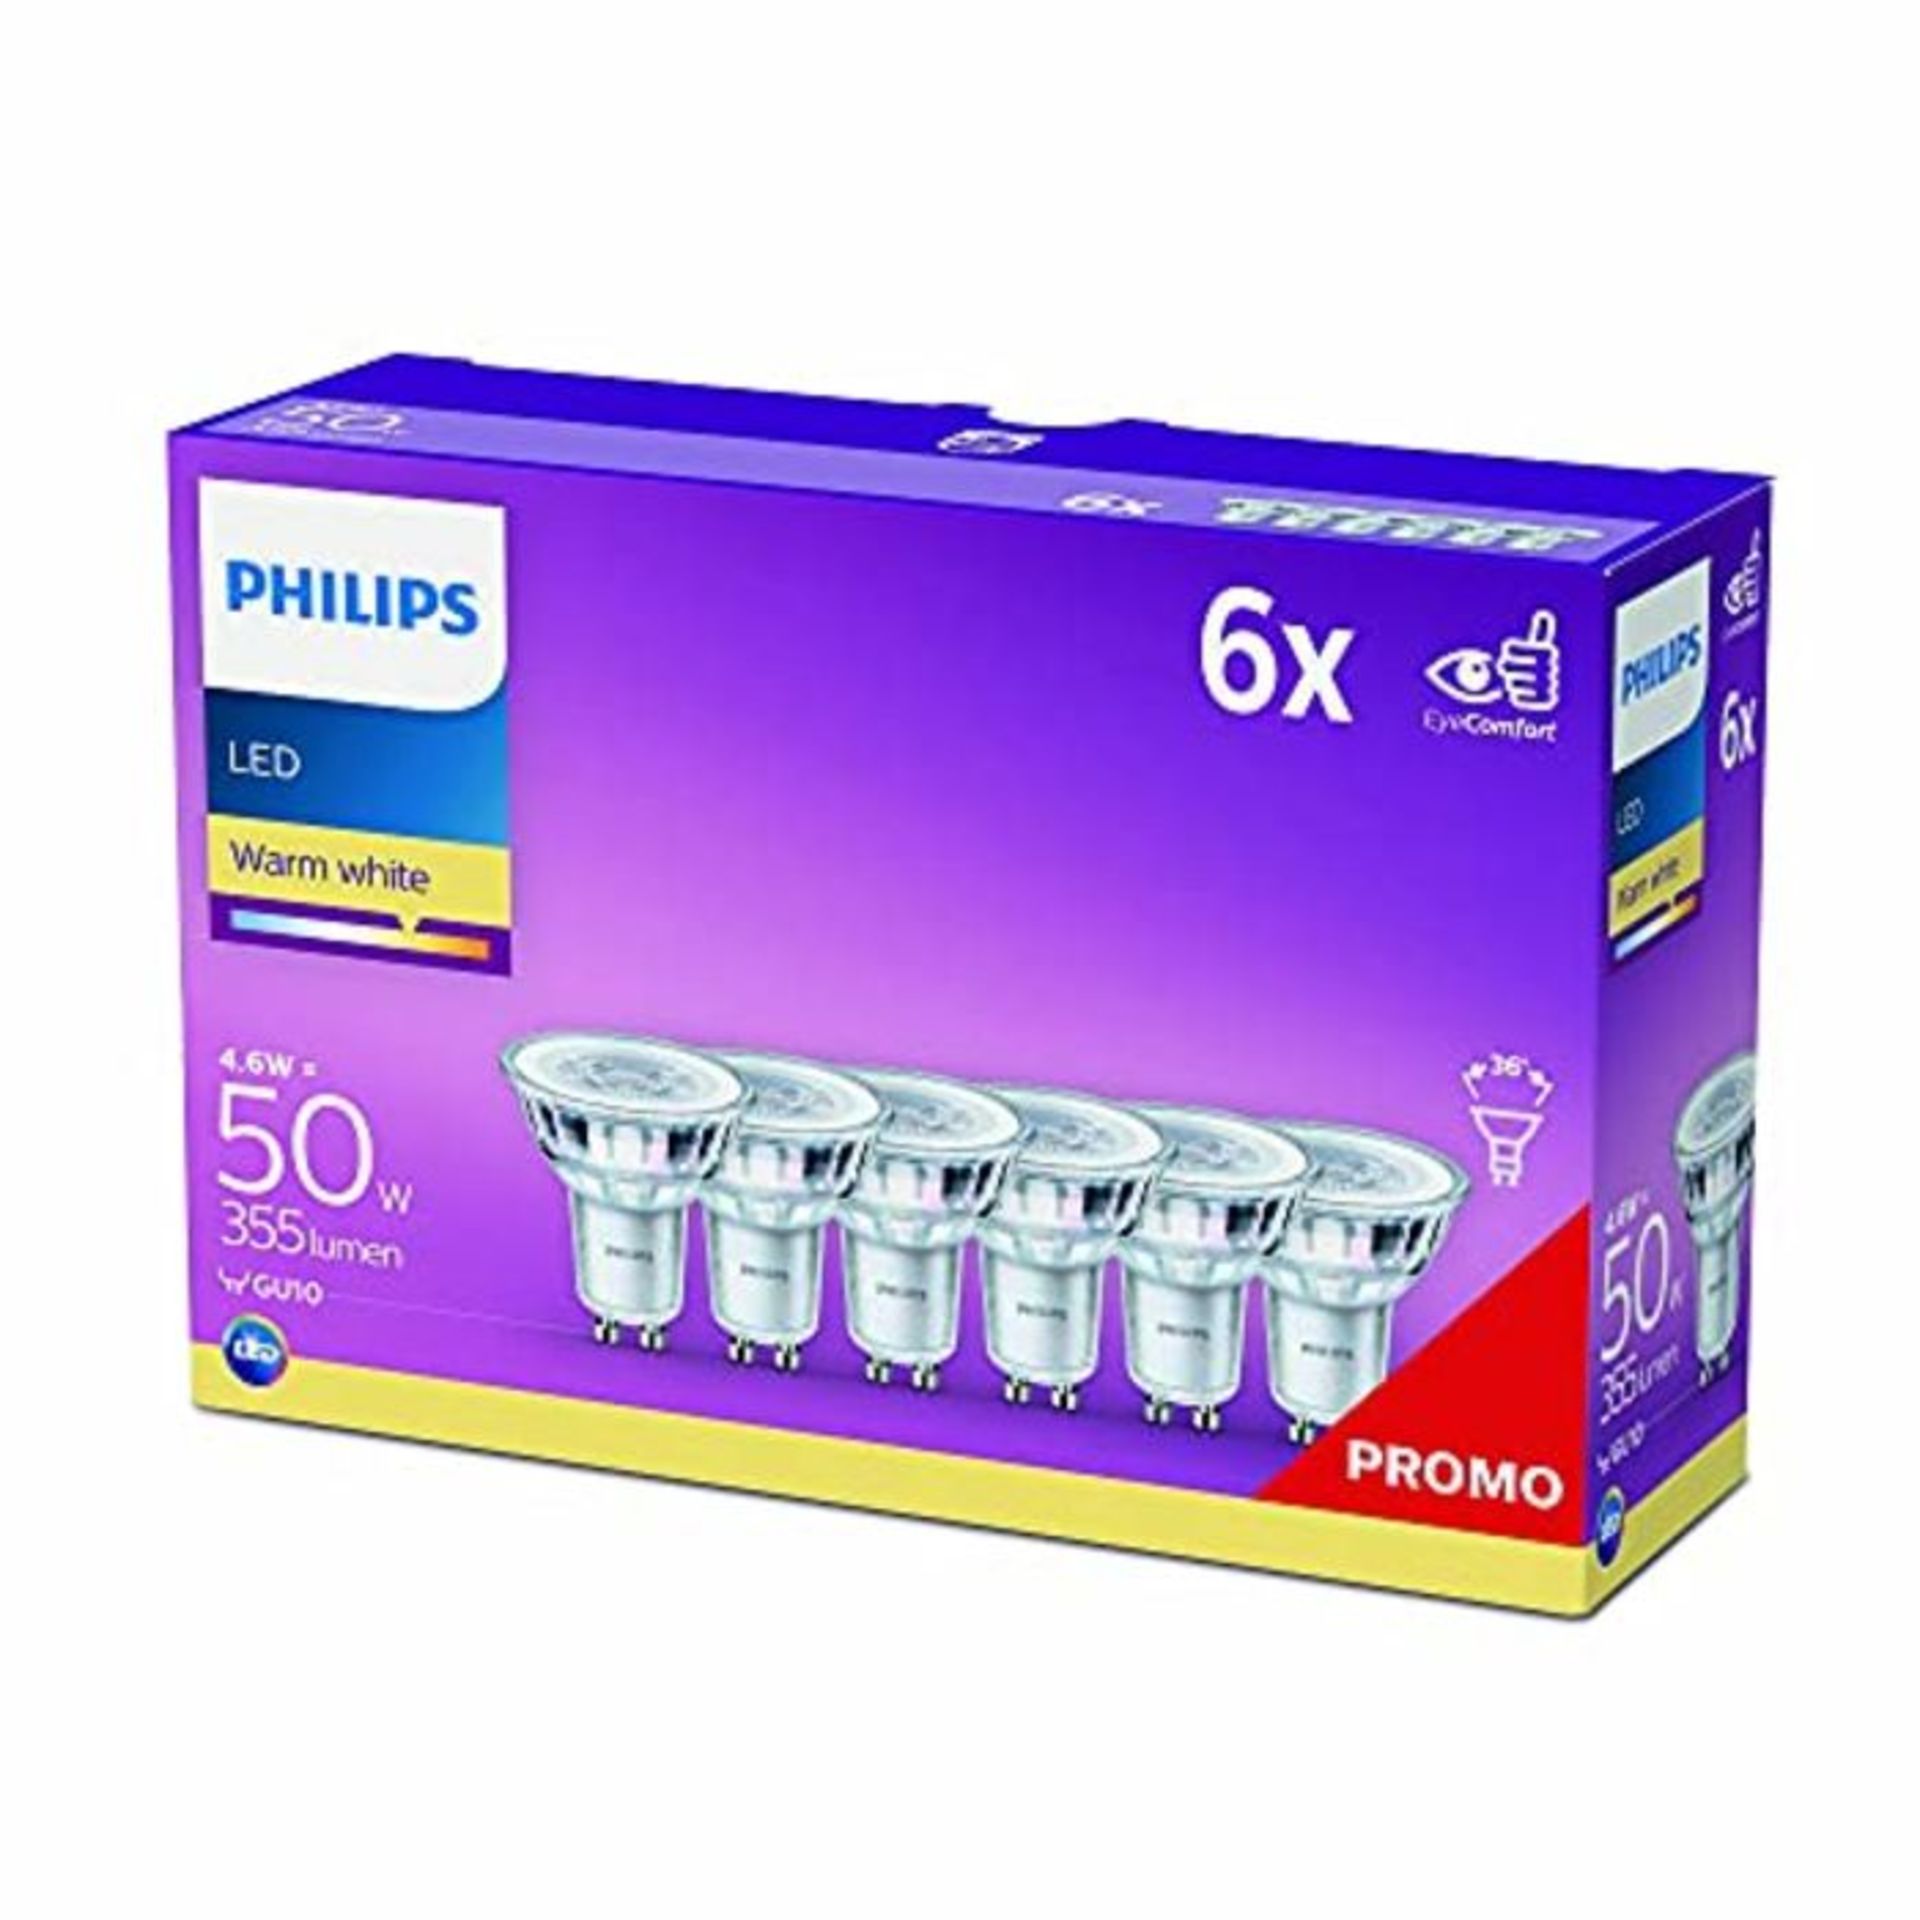 Philips LED Classic Light Bulbs, 6 Pack [GU10 Spot] 4.6 W - 50 W Equivalent, Warm Whi